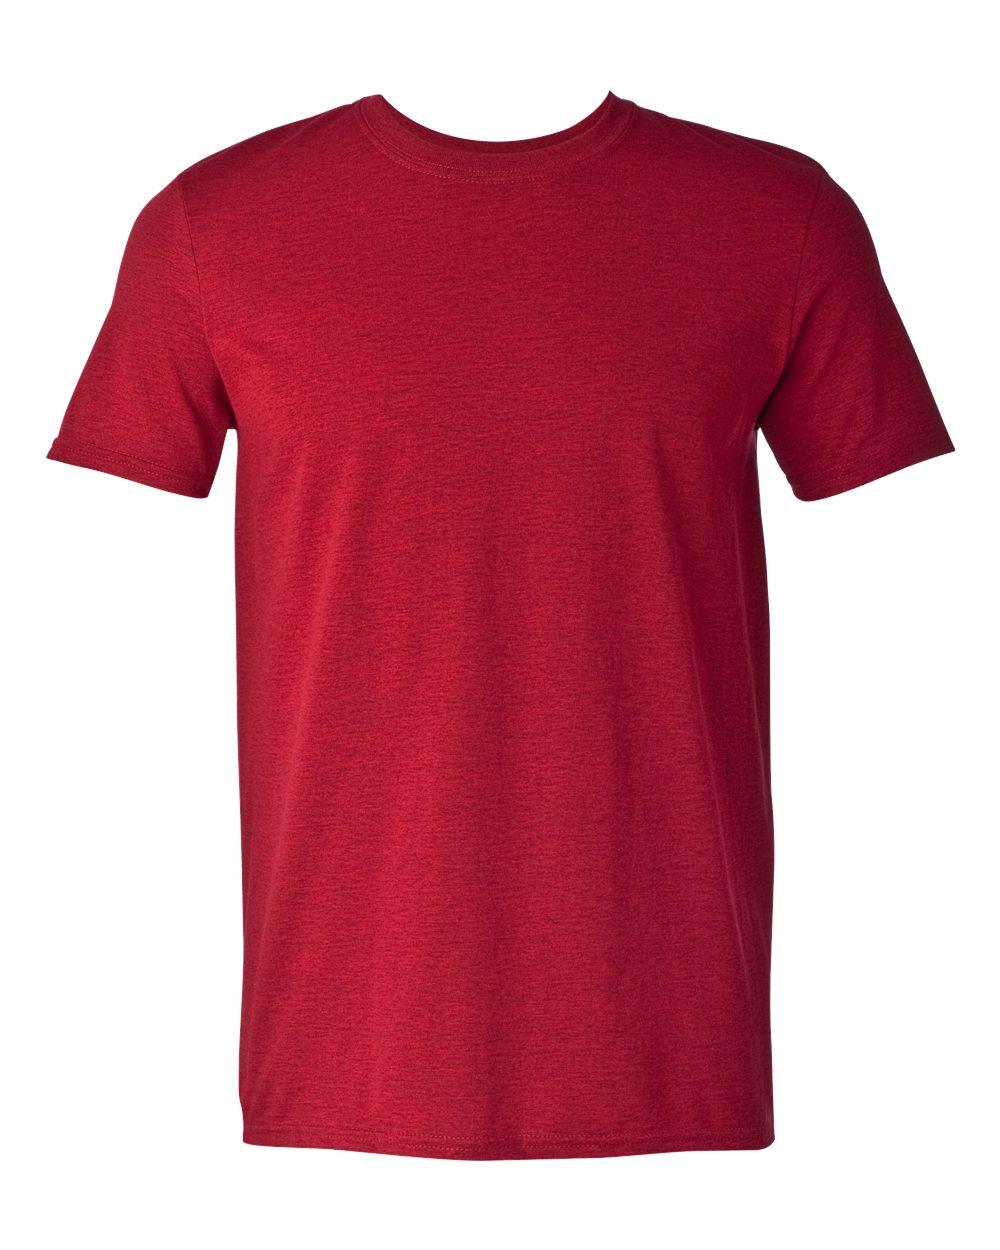 Free Softstyle® T-Shirt - Leatherwood Trading Post